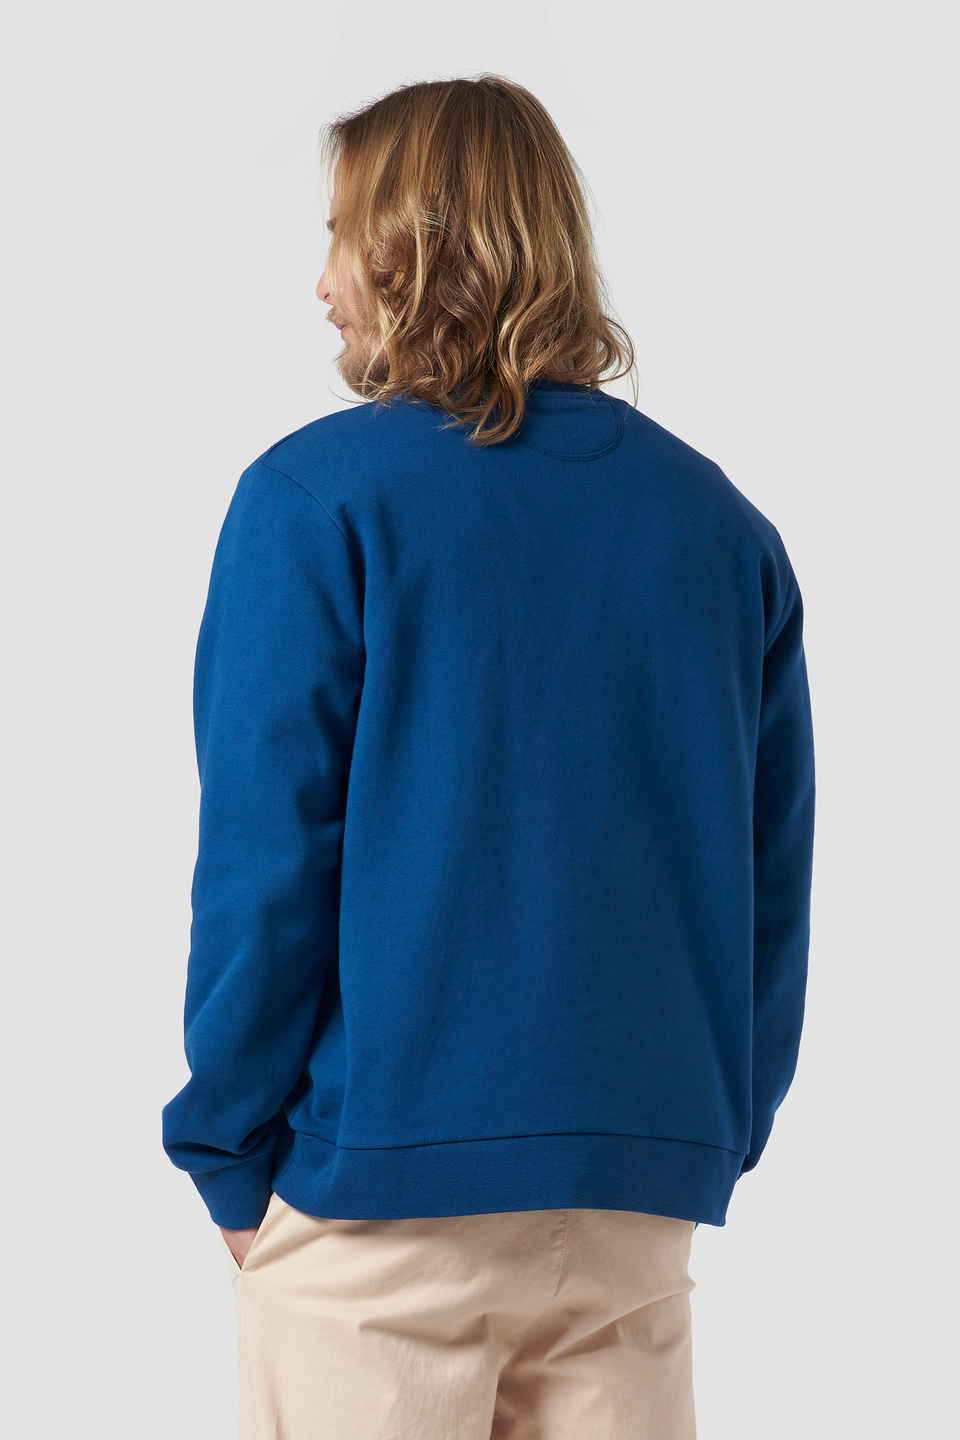 100% cotton crew-neck sweatshirt | La Martina - Official Online Shop